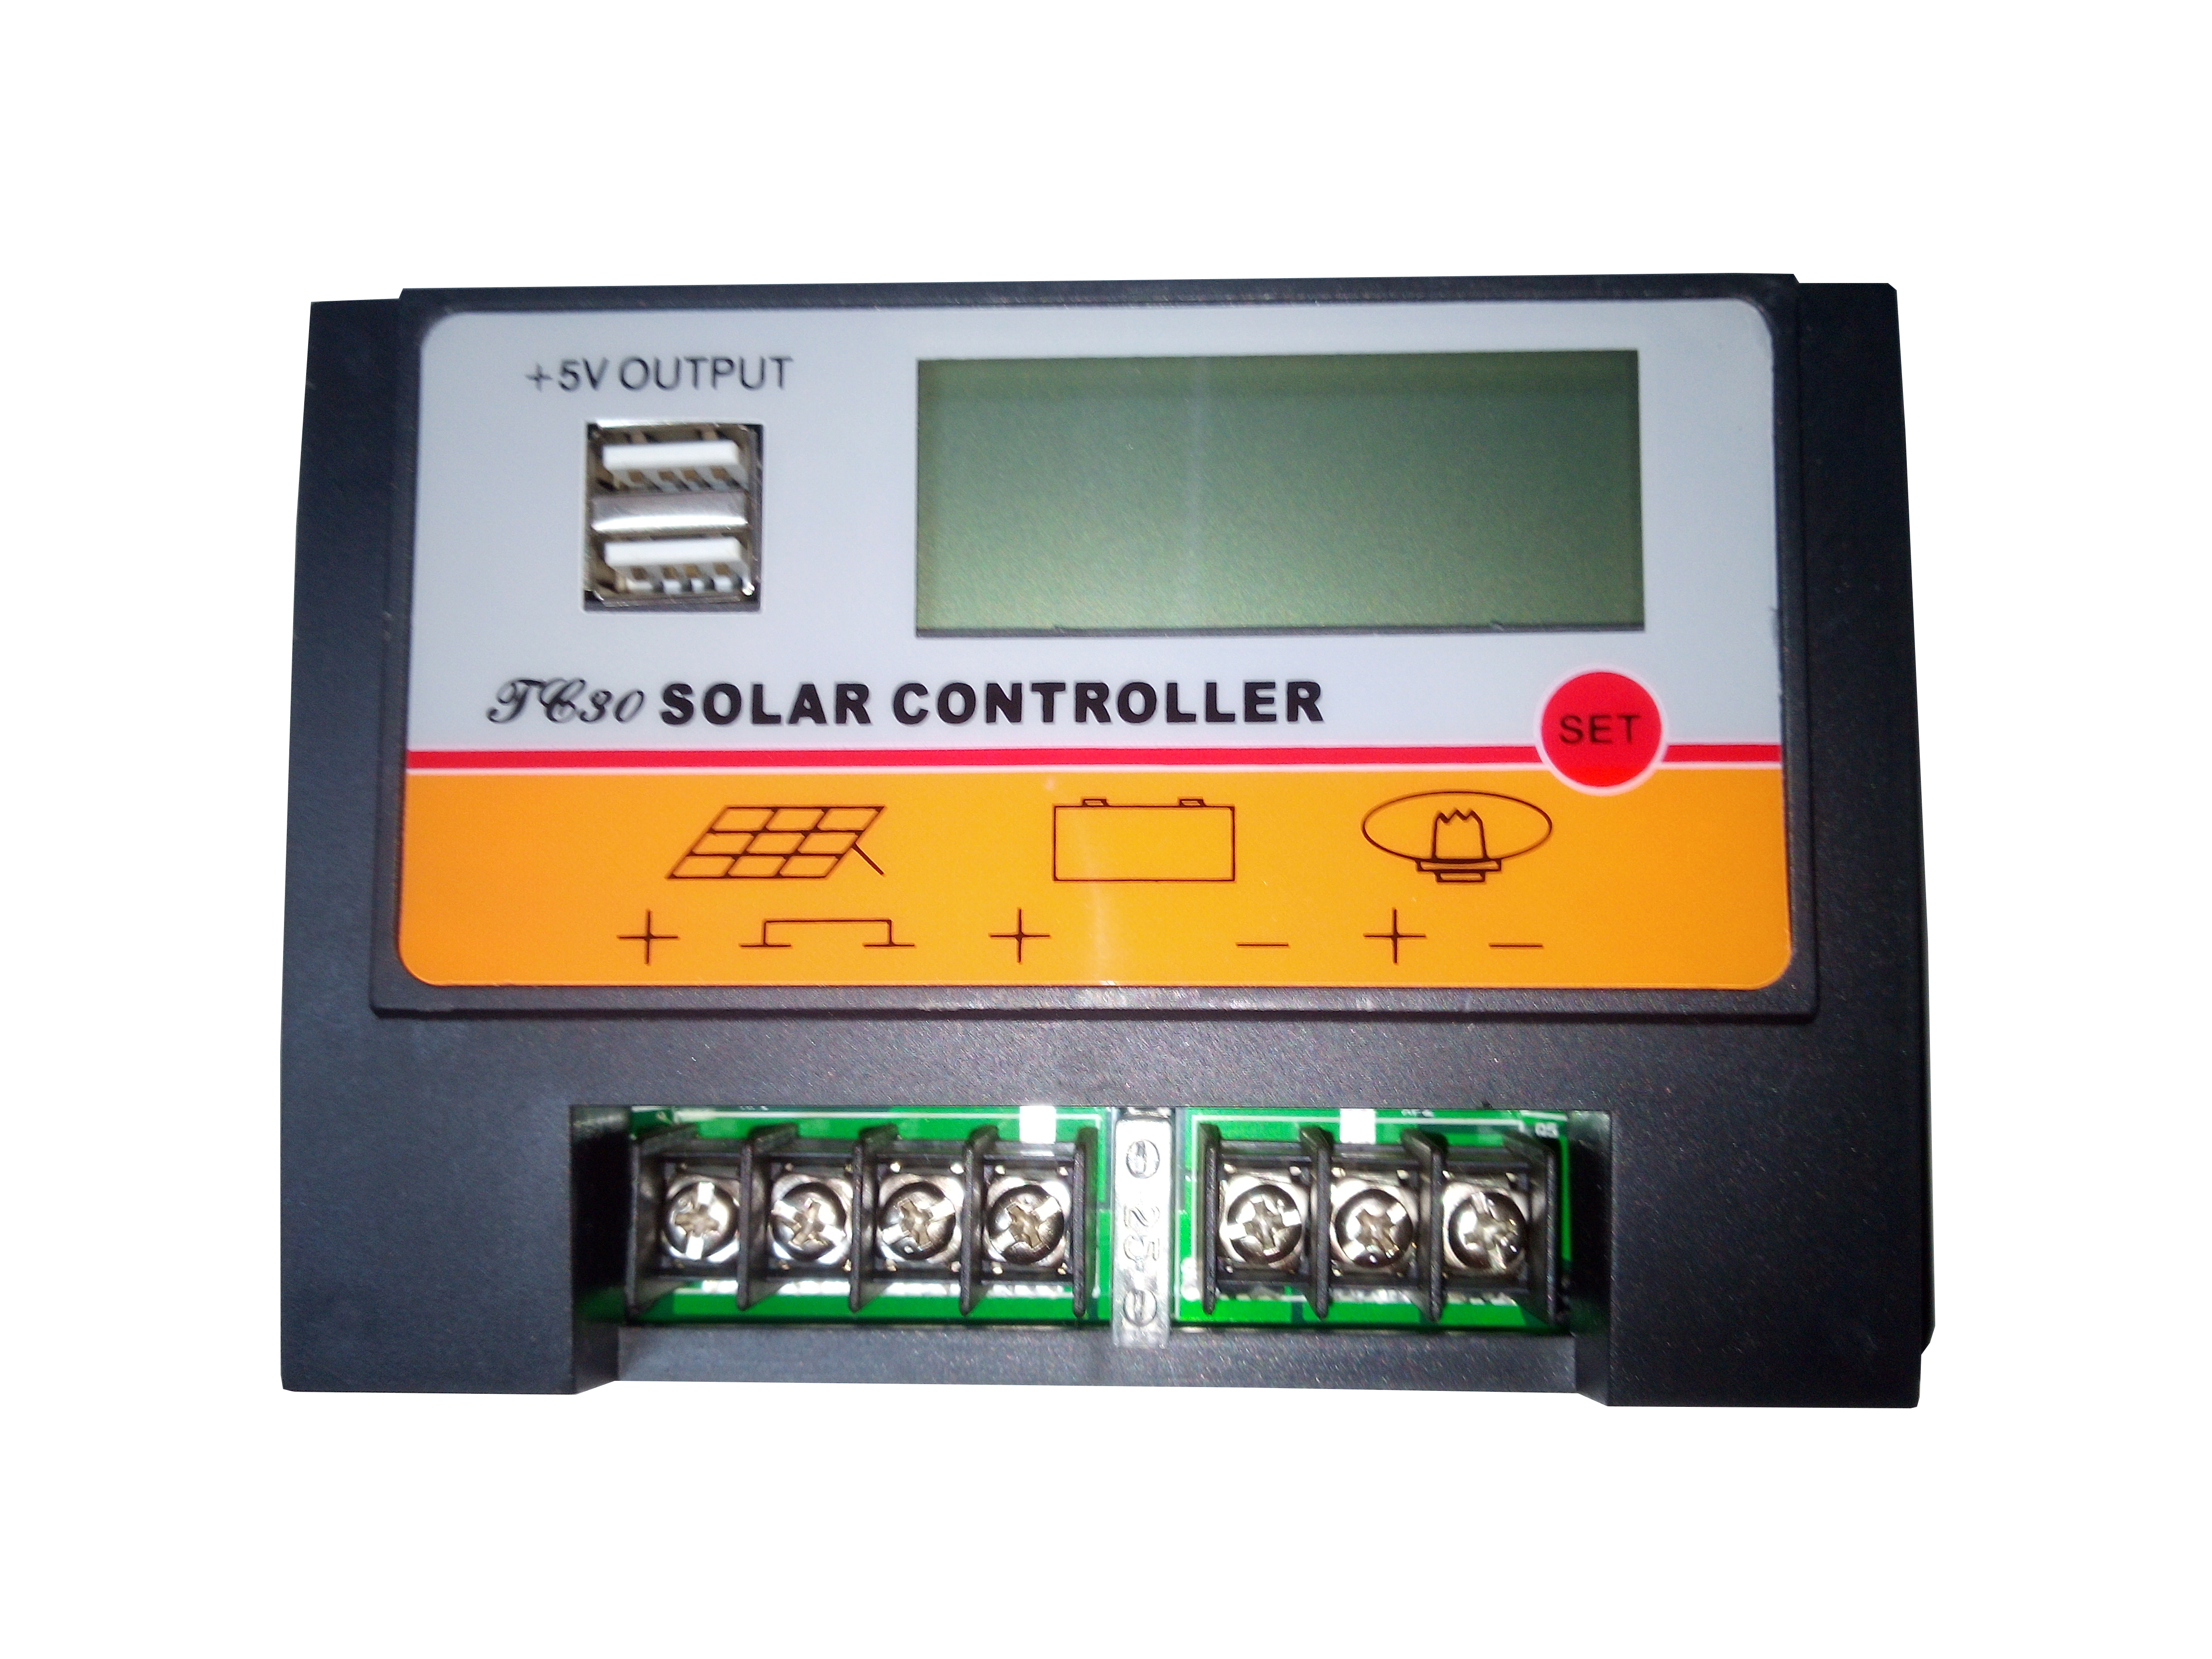 Klausstech - Controller solar jarrett incarcare baterie , 20 a , display grafic lcd , tensiune de incarcare 13,8 v/24,6 v , tensiunea joasa de protectie 10,7 v/21,4 v